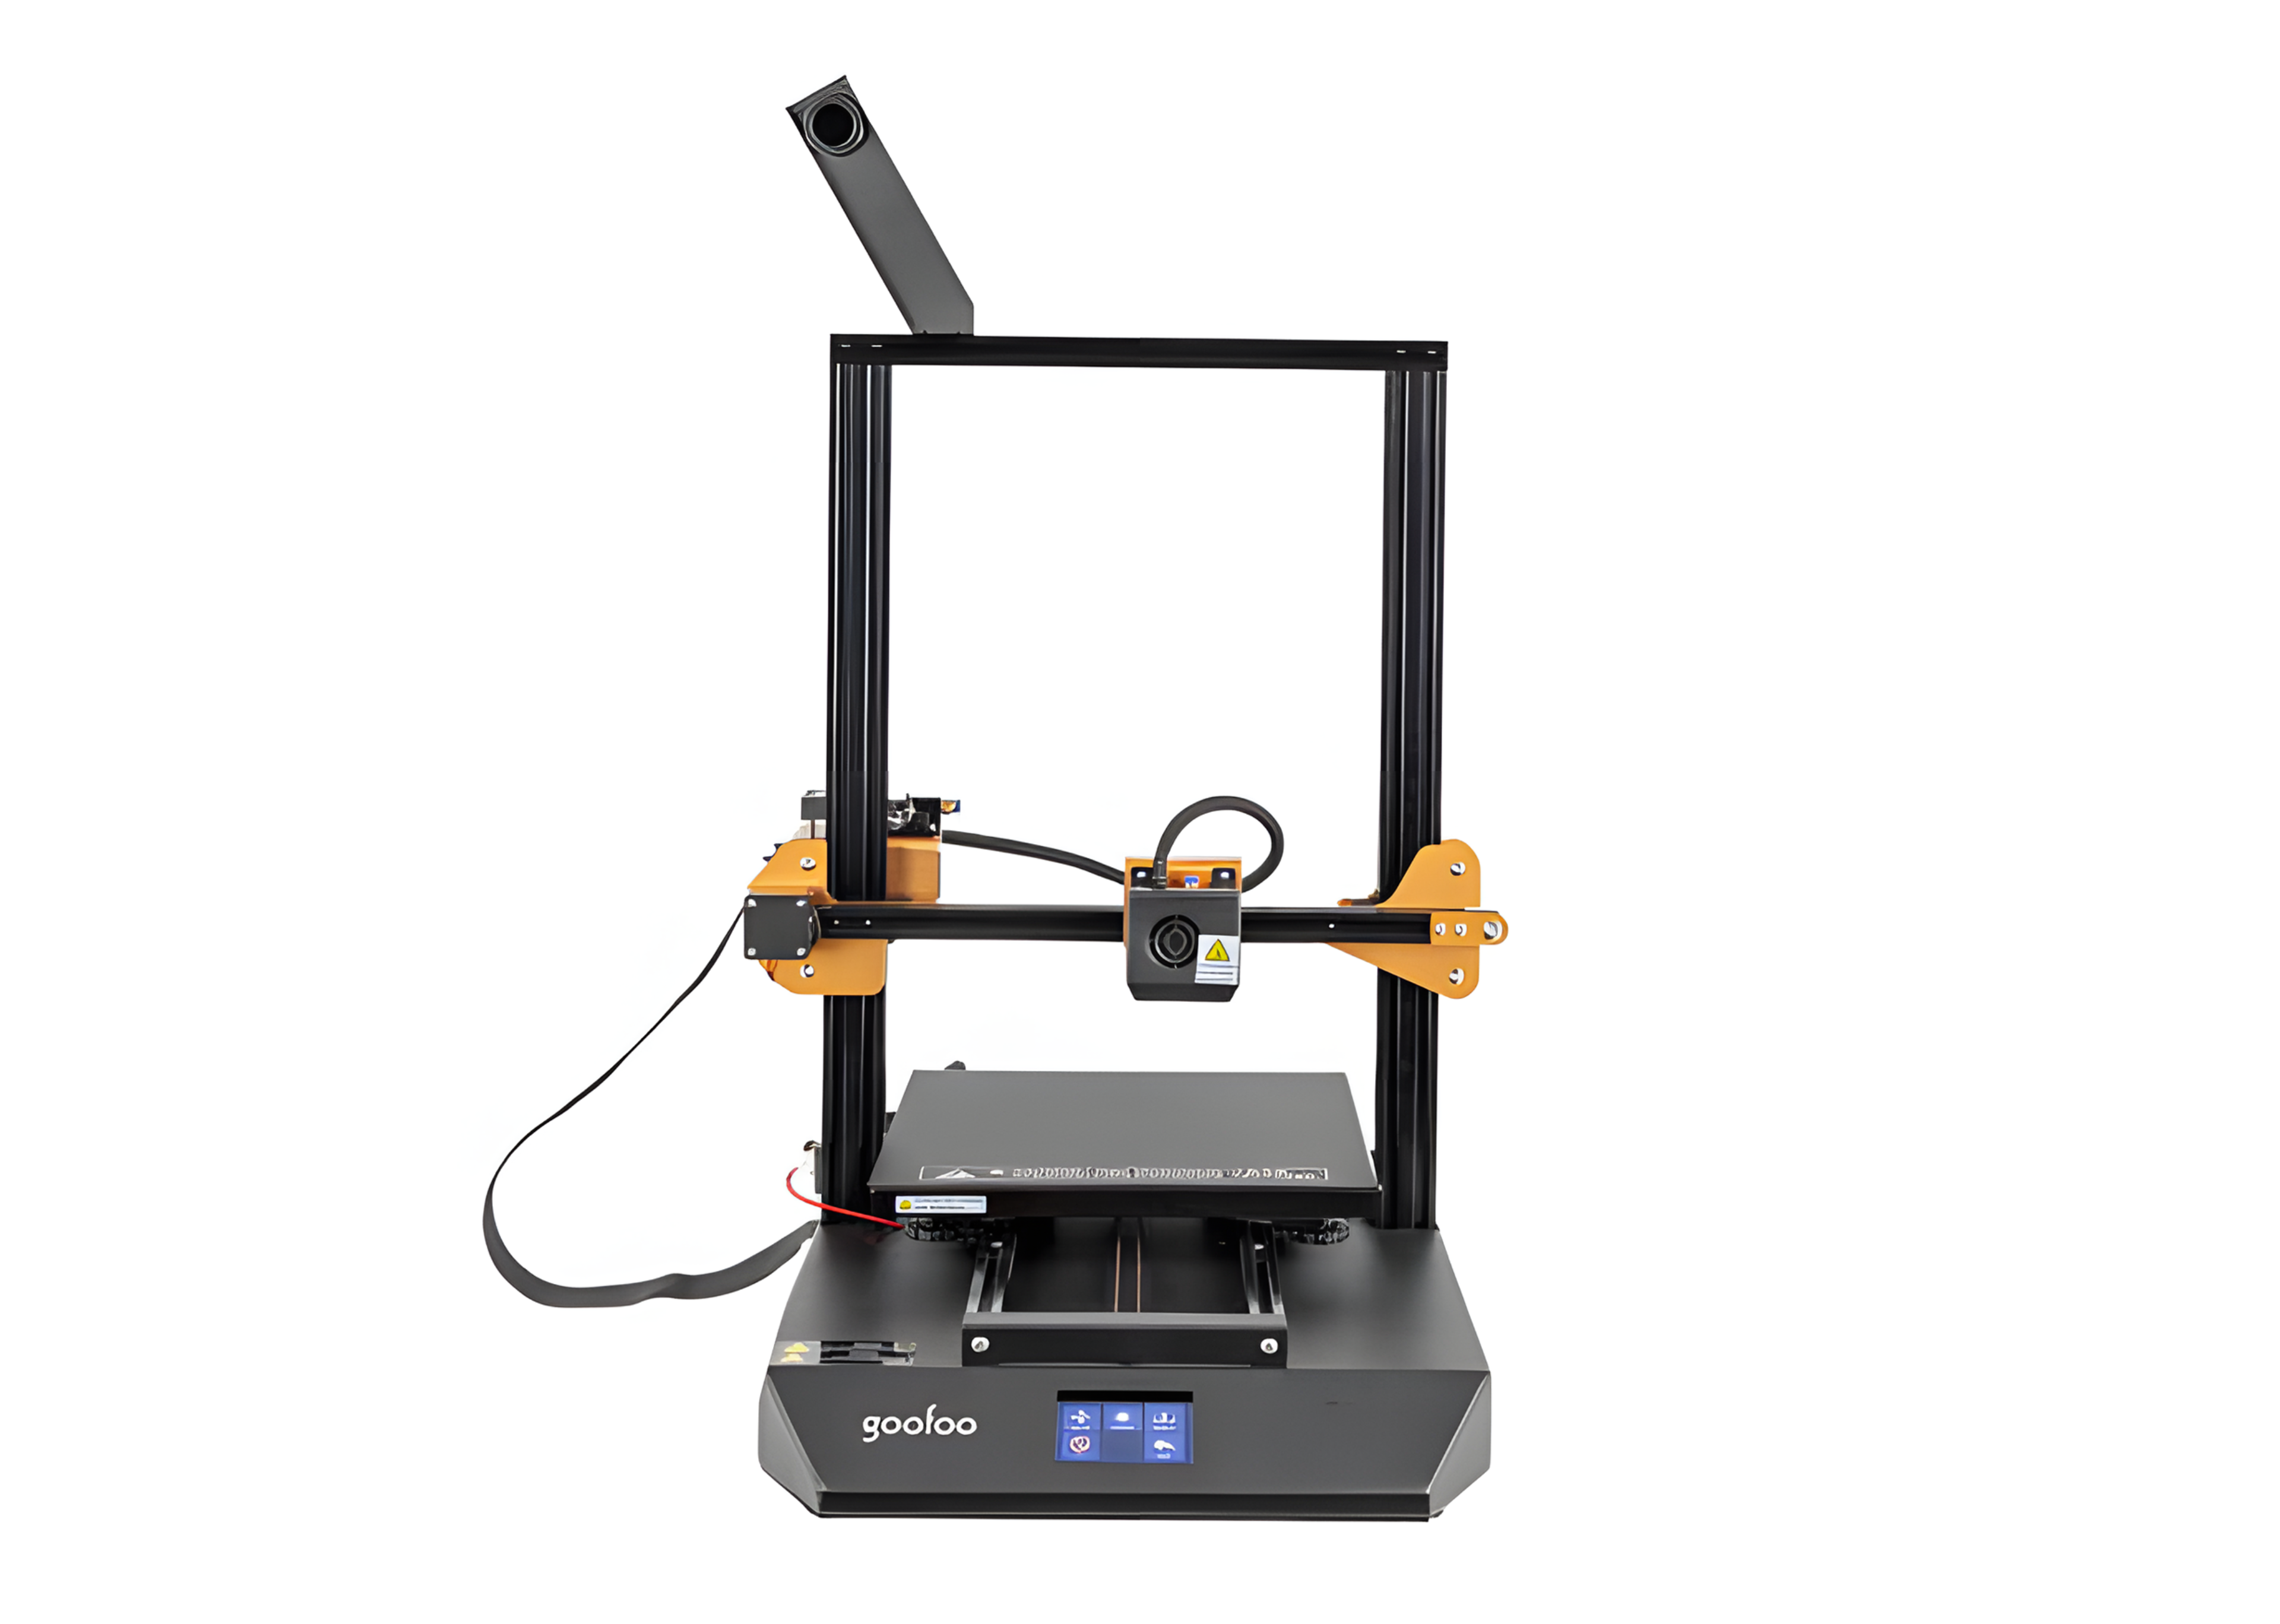 Goofoo E-one impresora 3d diy 300*300*400mm FDM printing machine